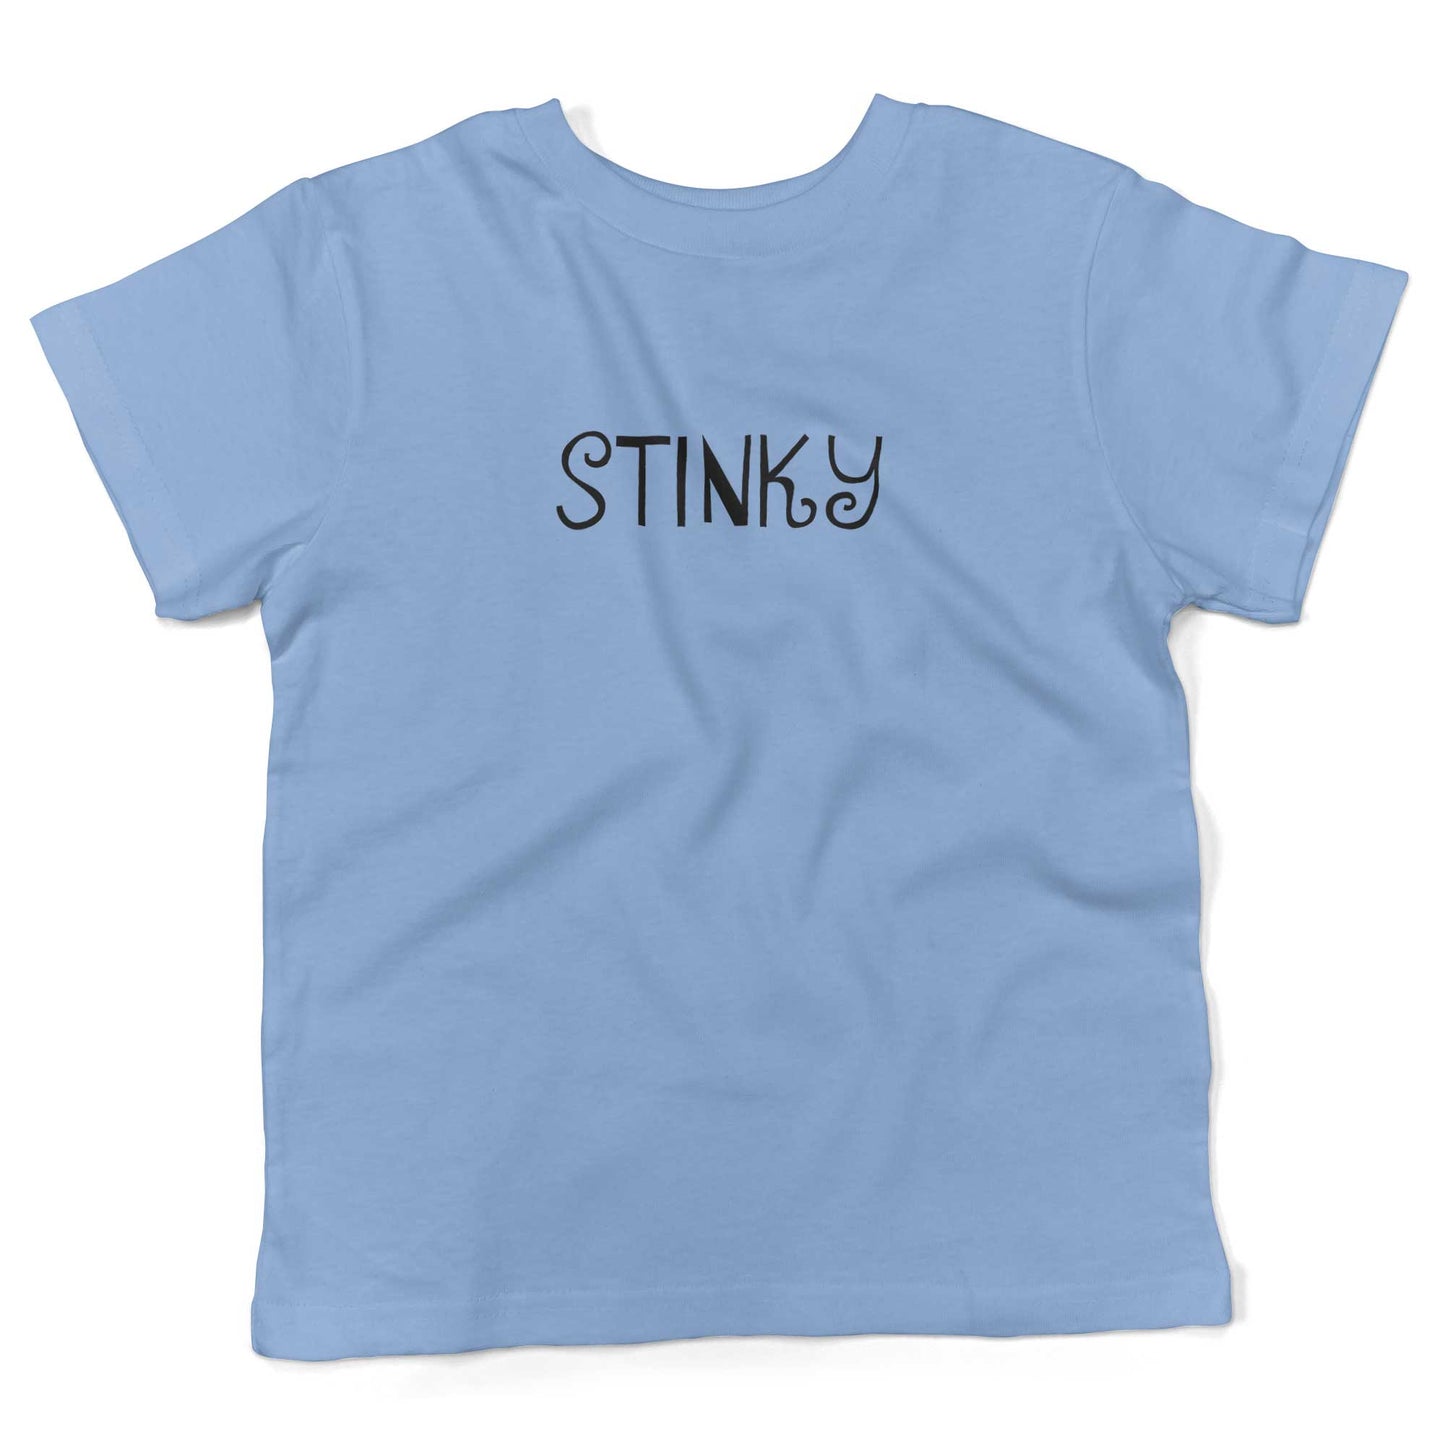 Stinky Toddler Shirt-Organic Baby Blue-2T